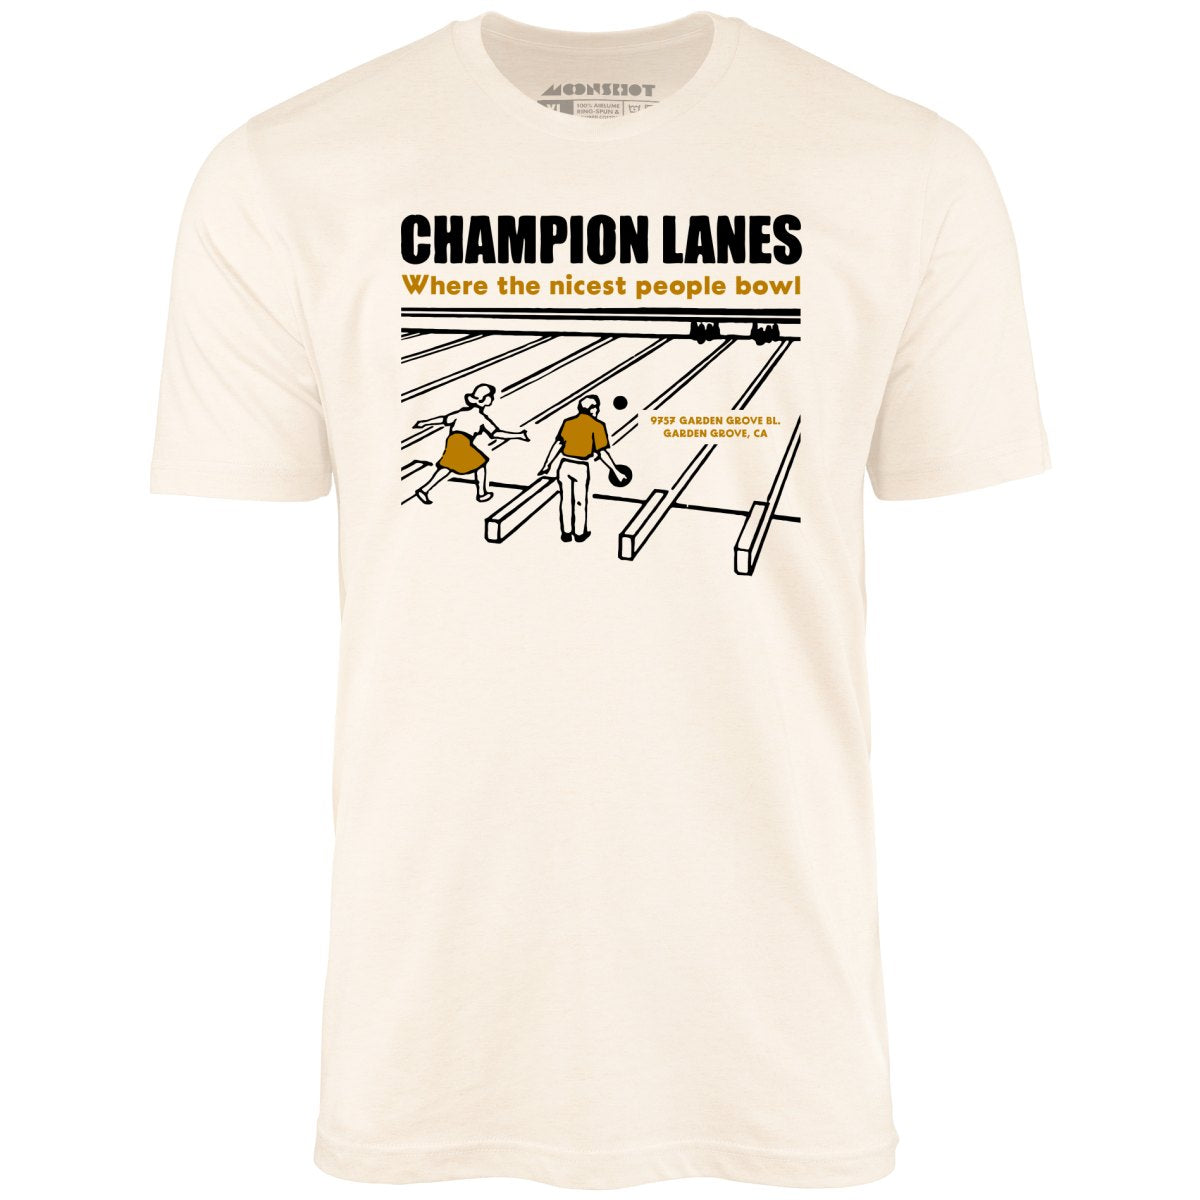 Champion Lanes - Garden Grove, CA - Vintage Bowling Alley - Unisex T-Shirt